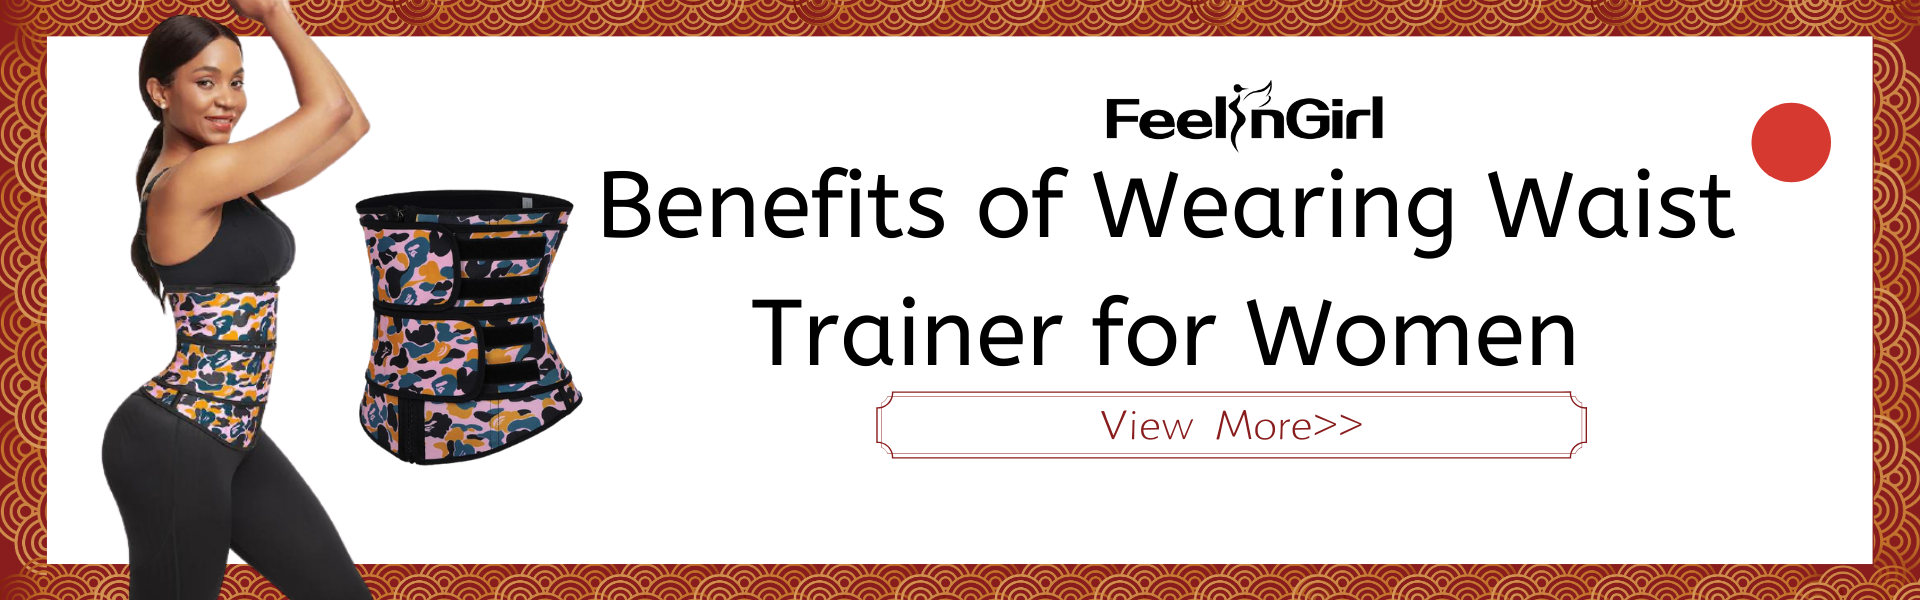 Benefits of Wearing Waist Trainer for Women